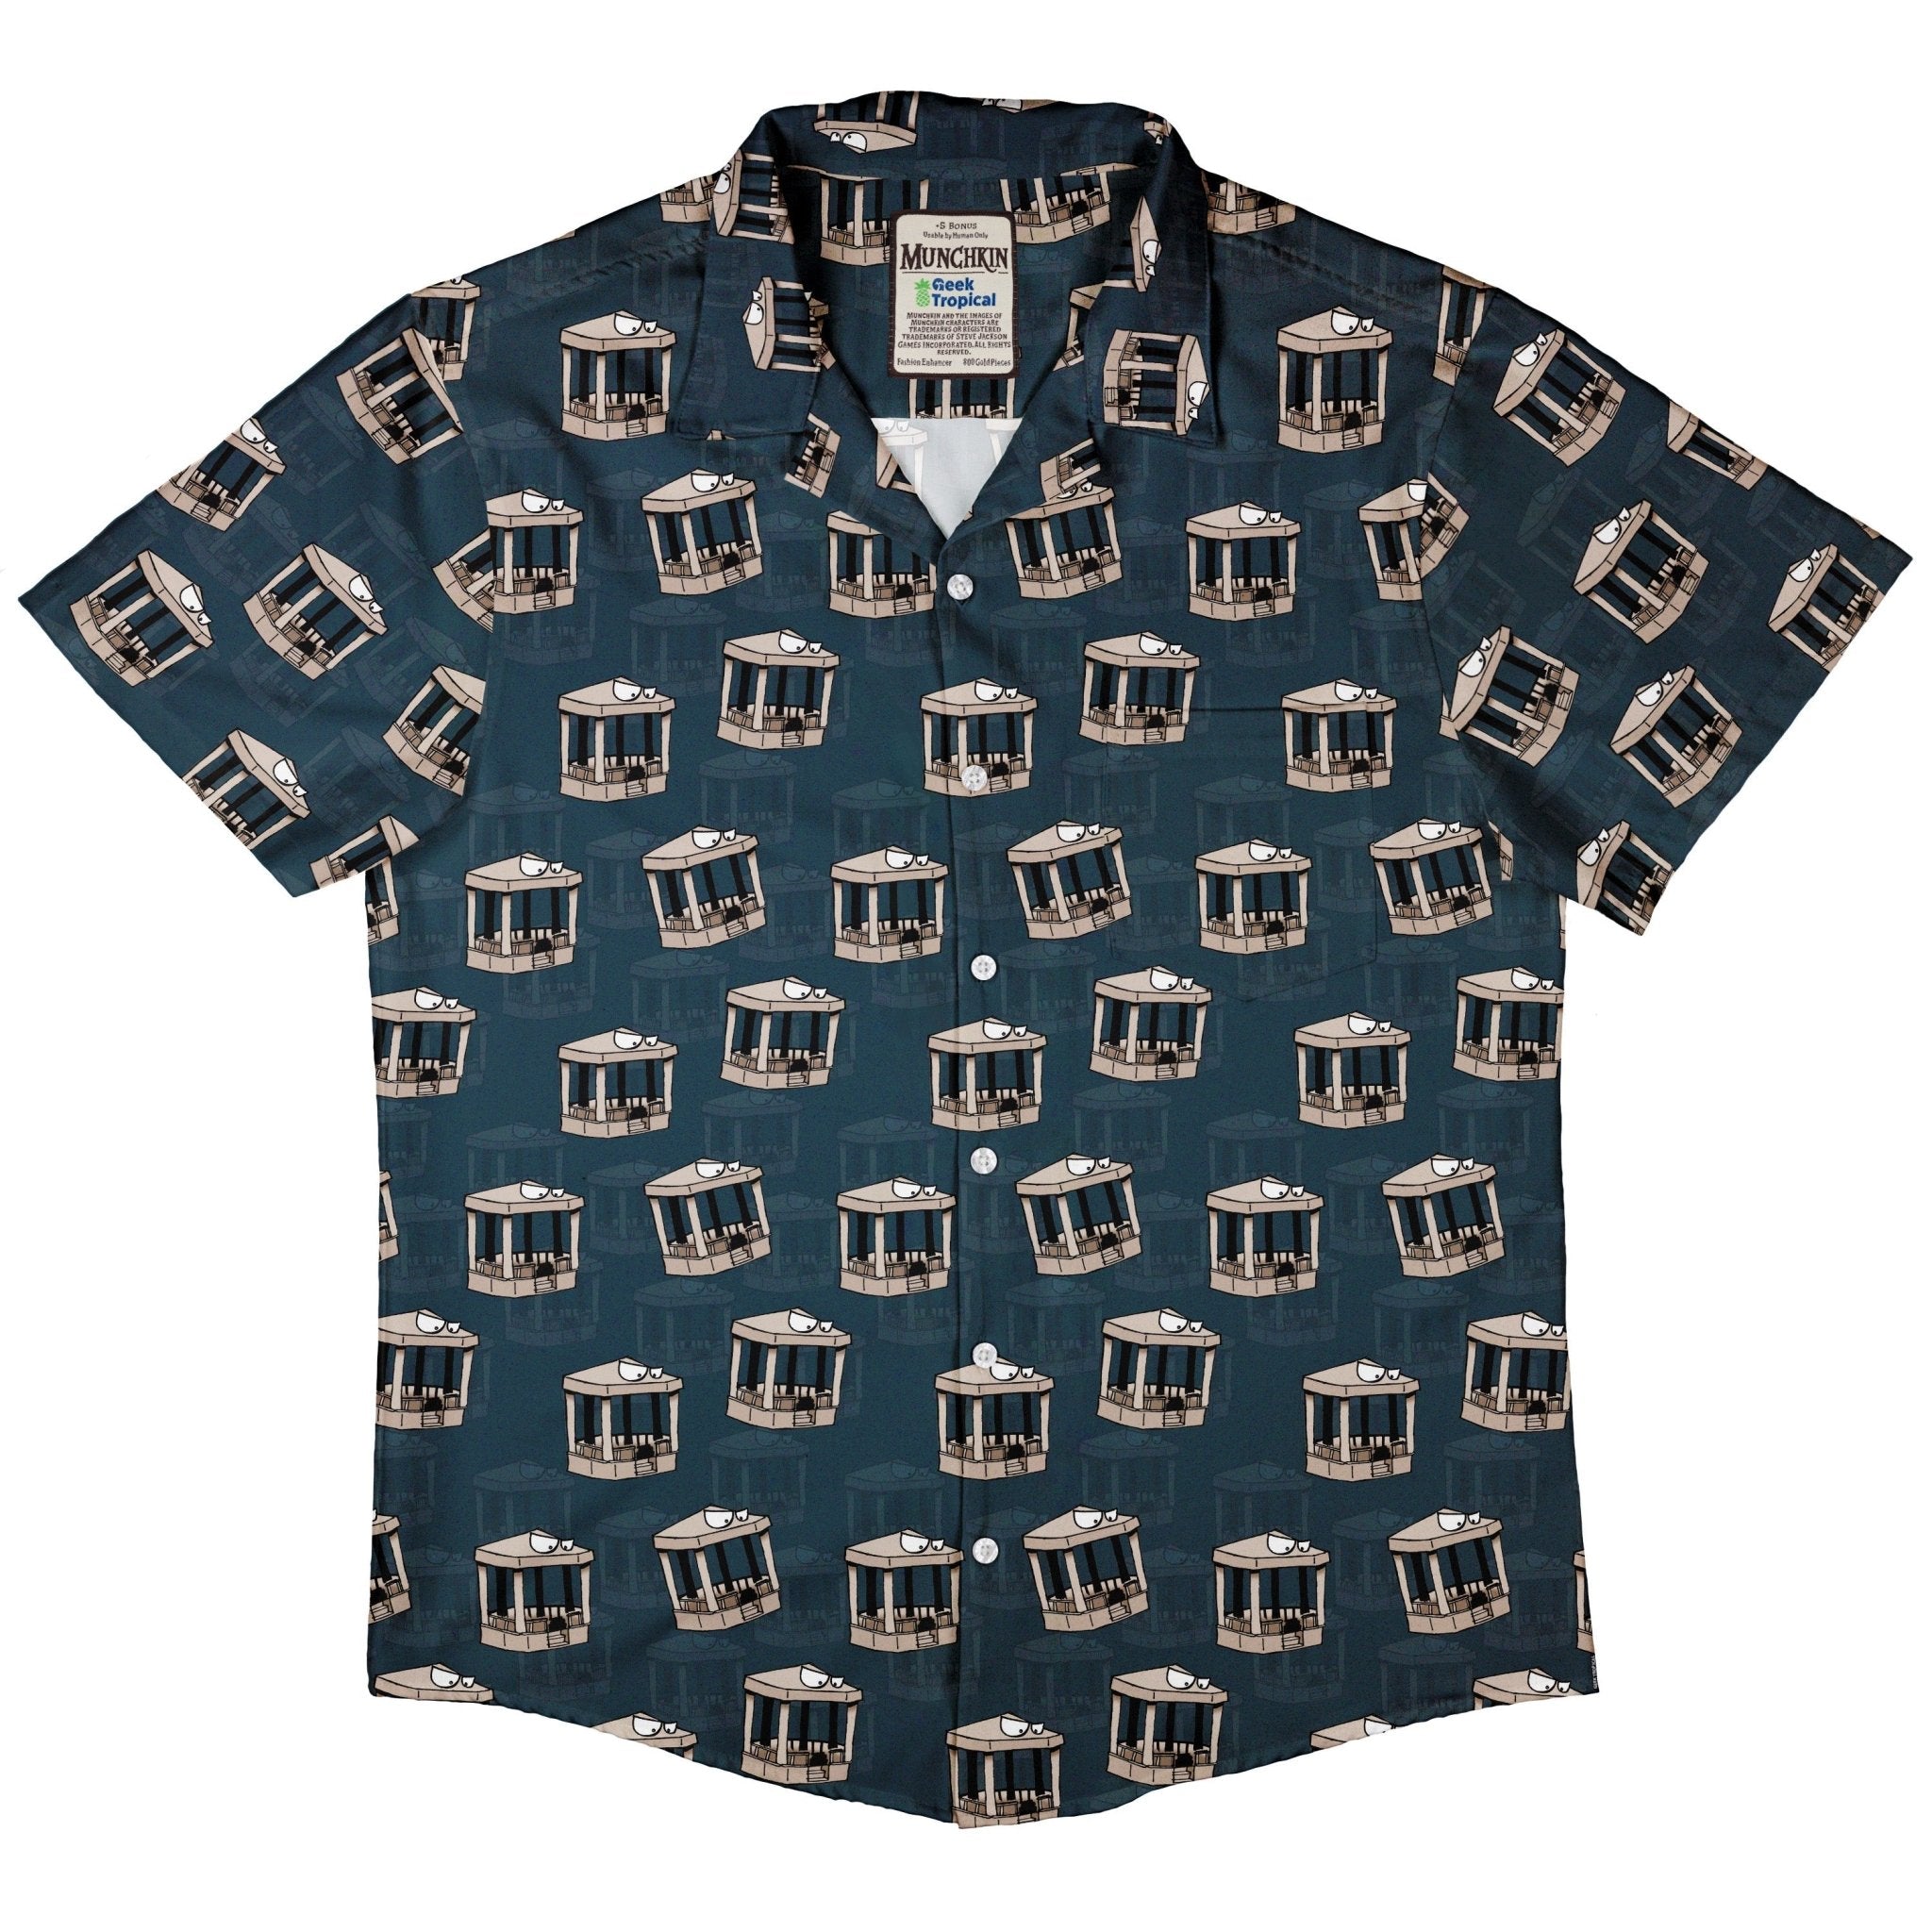 Munchkin Gazebos Button Up Shirt - board game print - Design by Dunking Toast - Munchkin print